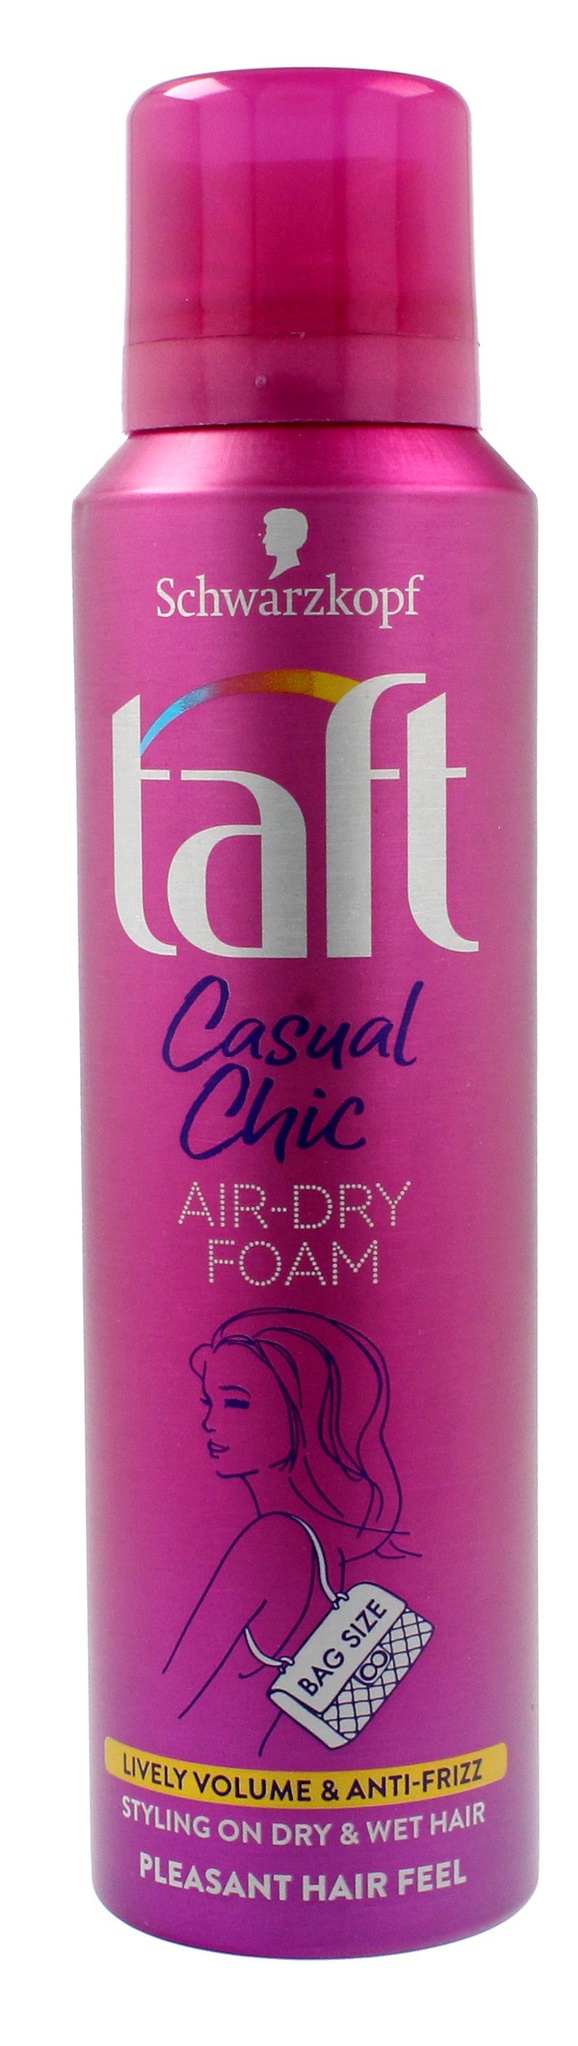 Schwarzkopf Taft Casual Chic Air-Dry Foam